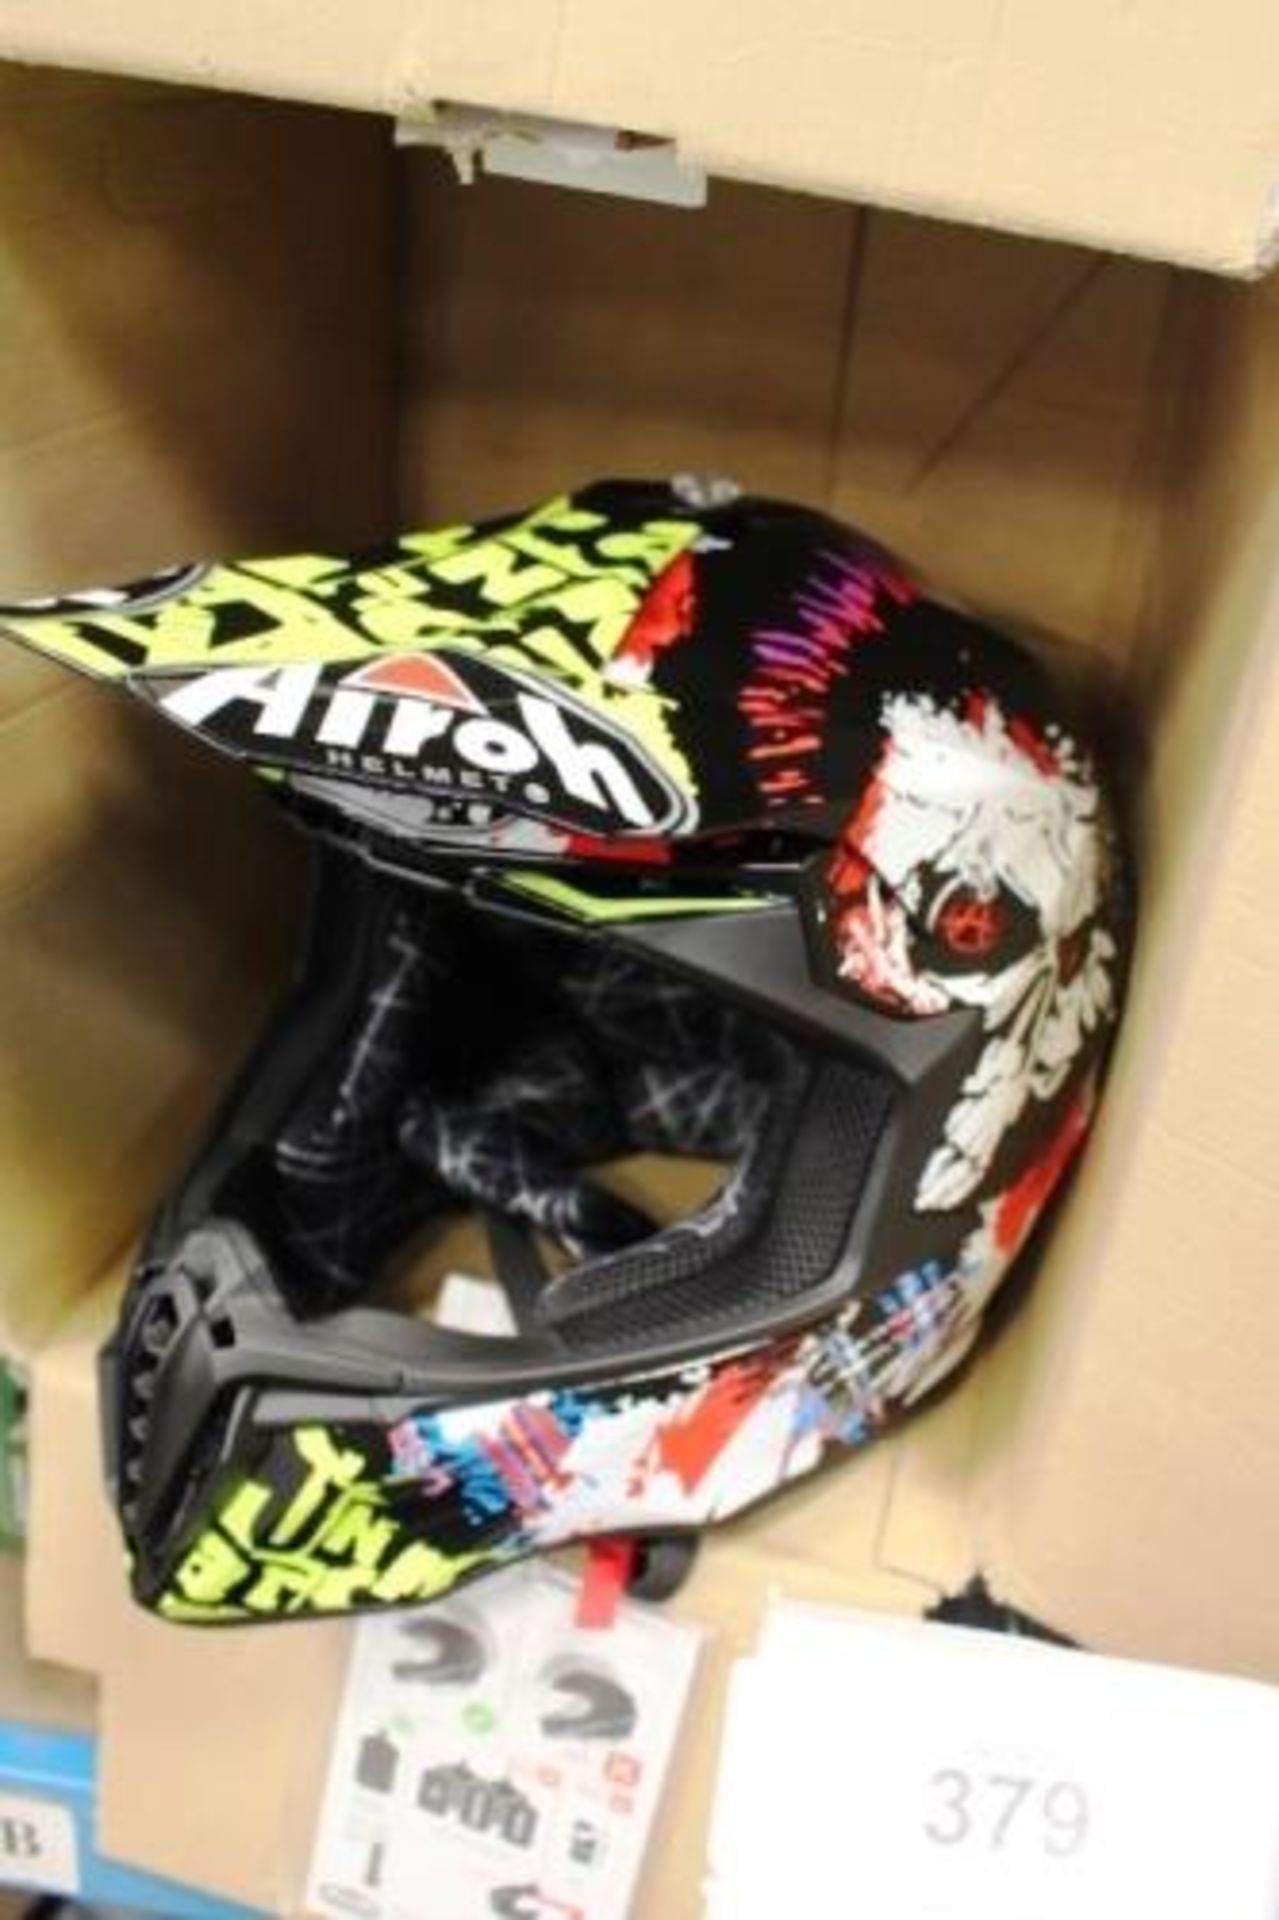 1 x Airoh twist crazy black gloss TWCR56 helmet, size L code AIOA13RWIHZC - New in box (GS4)